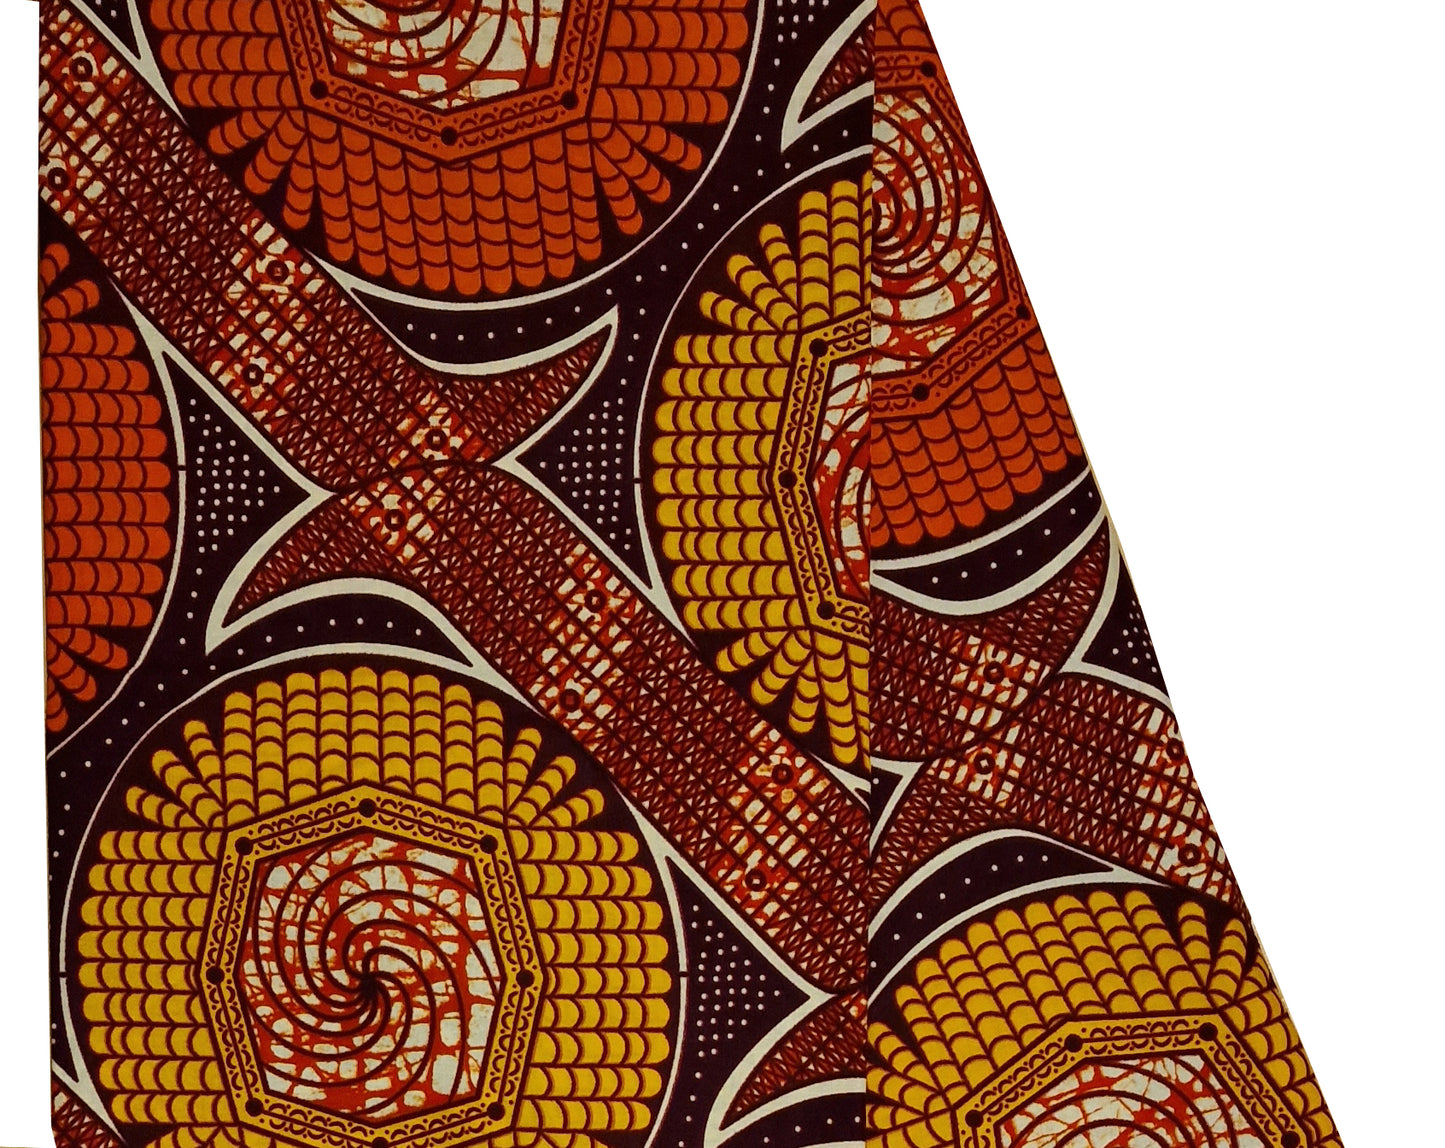 African Gold Wax Print Fabric, African Wax Cotton Gold